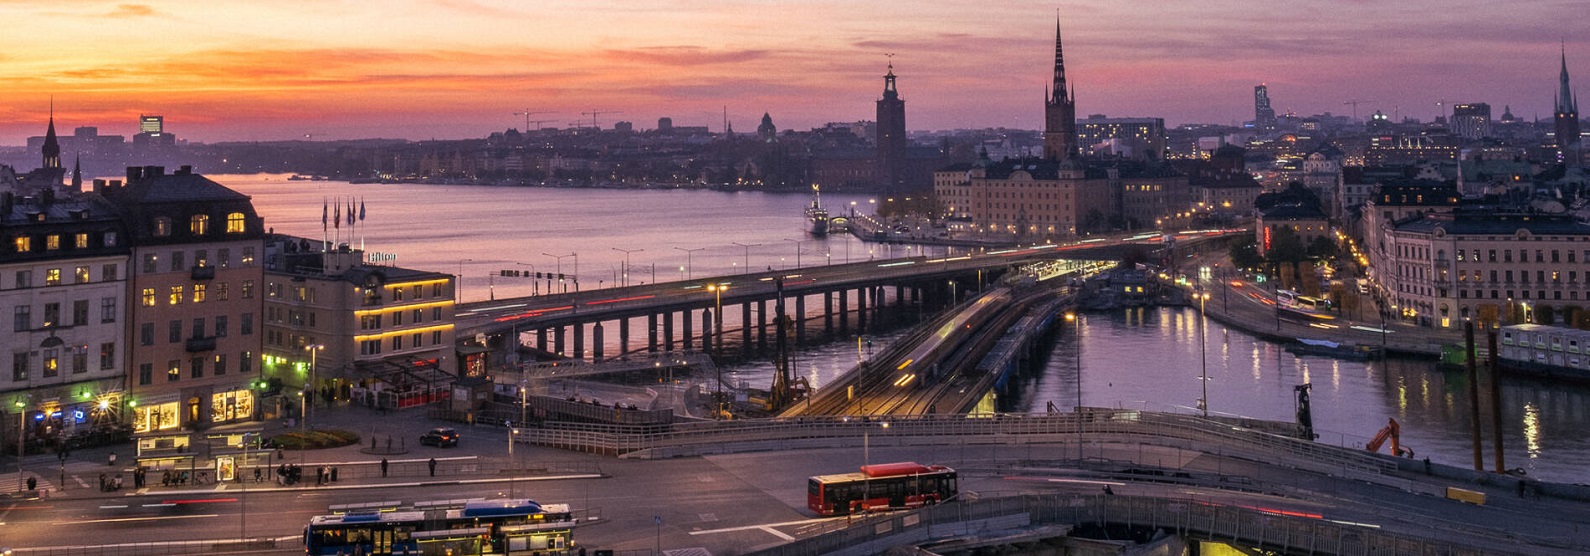 Sunset over Stockholm City